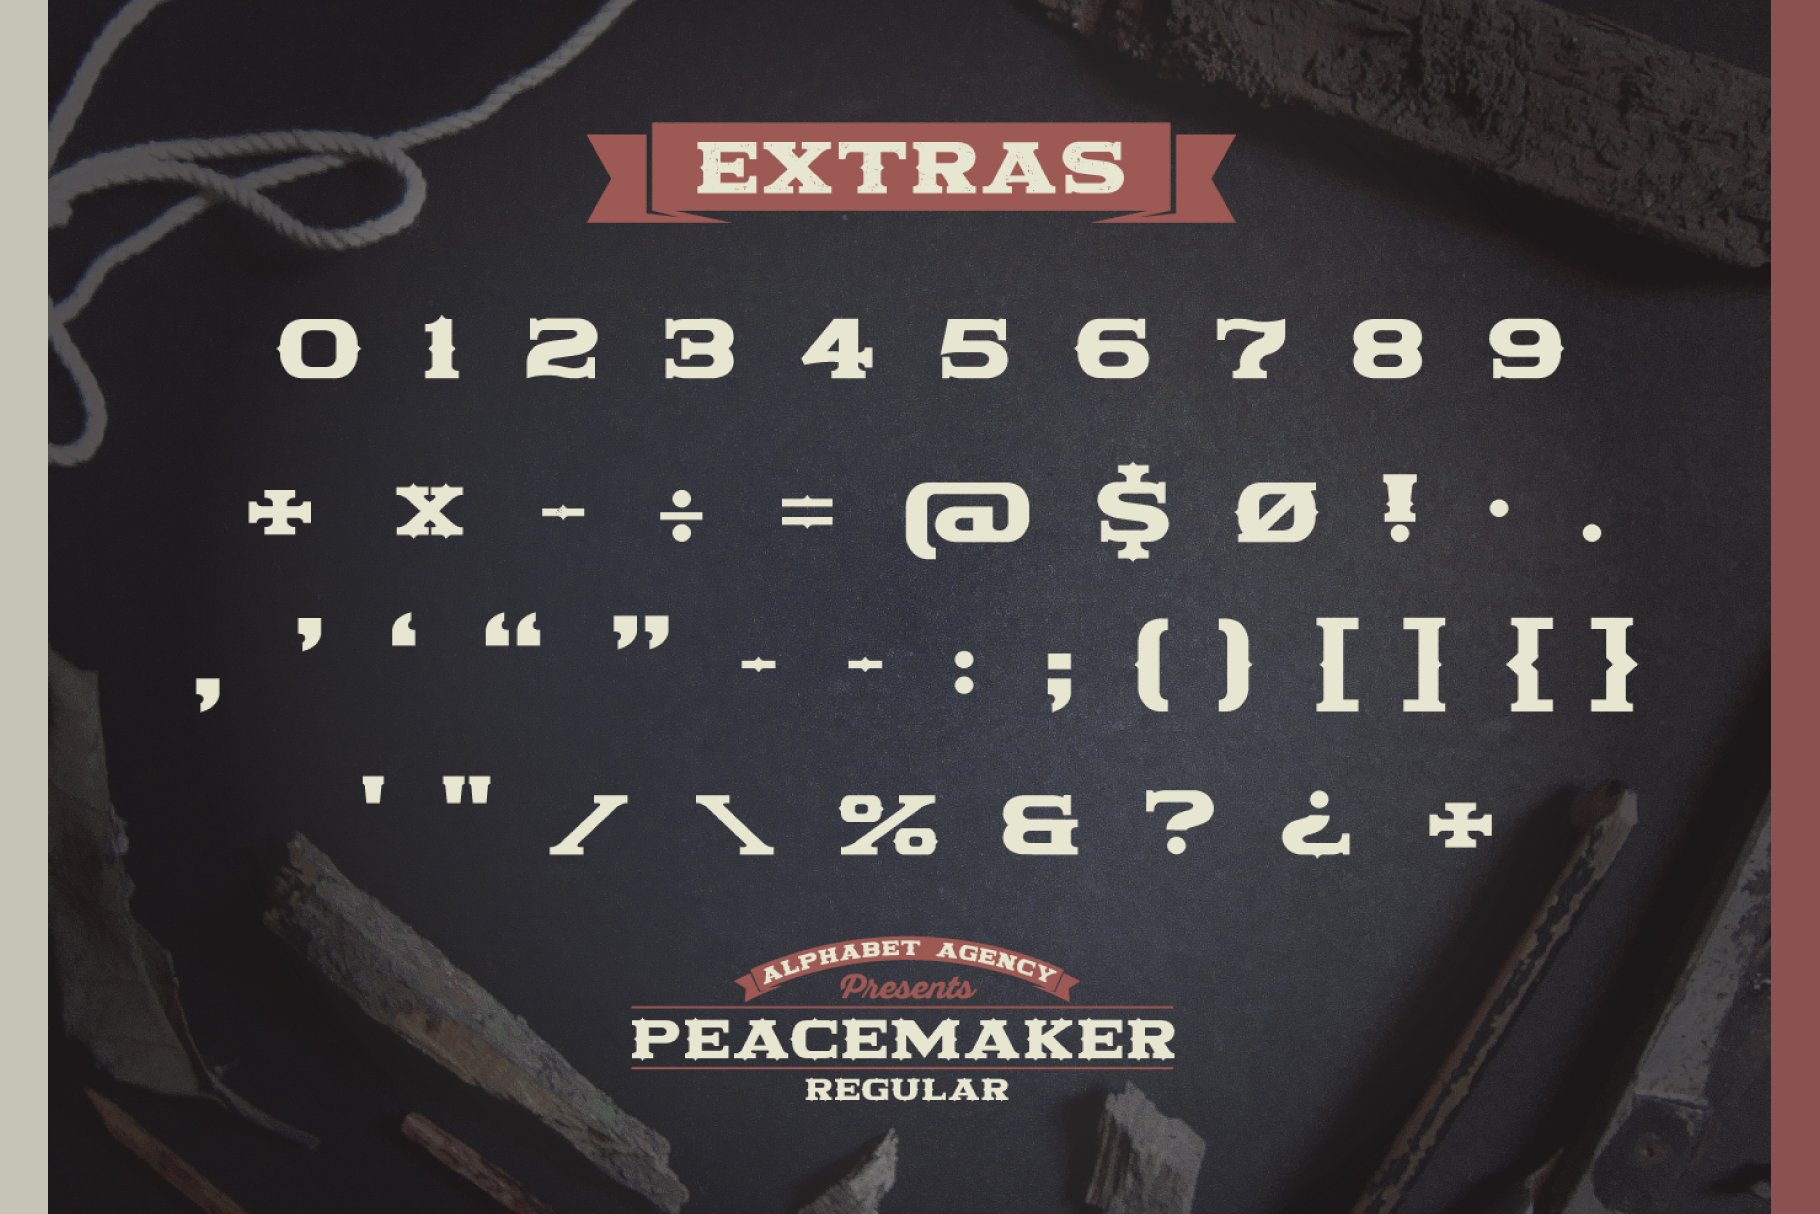 peacemaker regular extras1 1820x1214 772